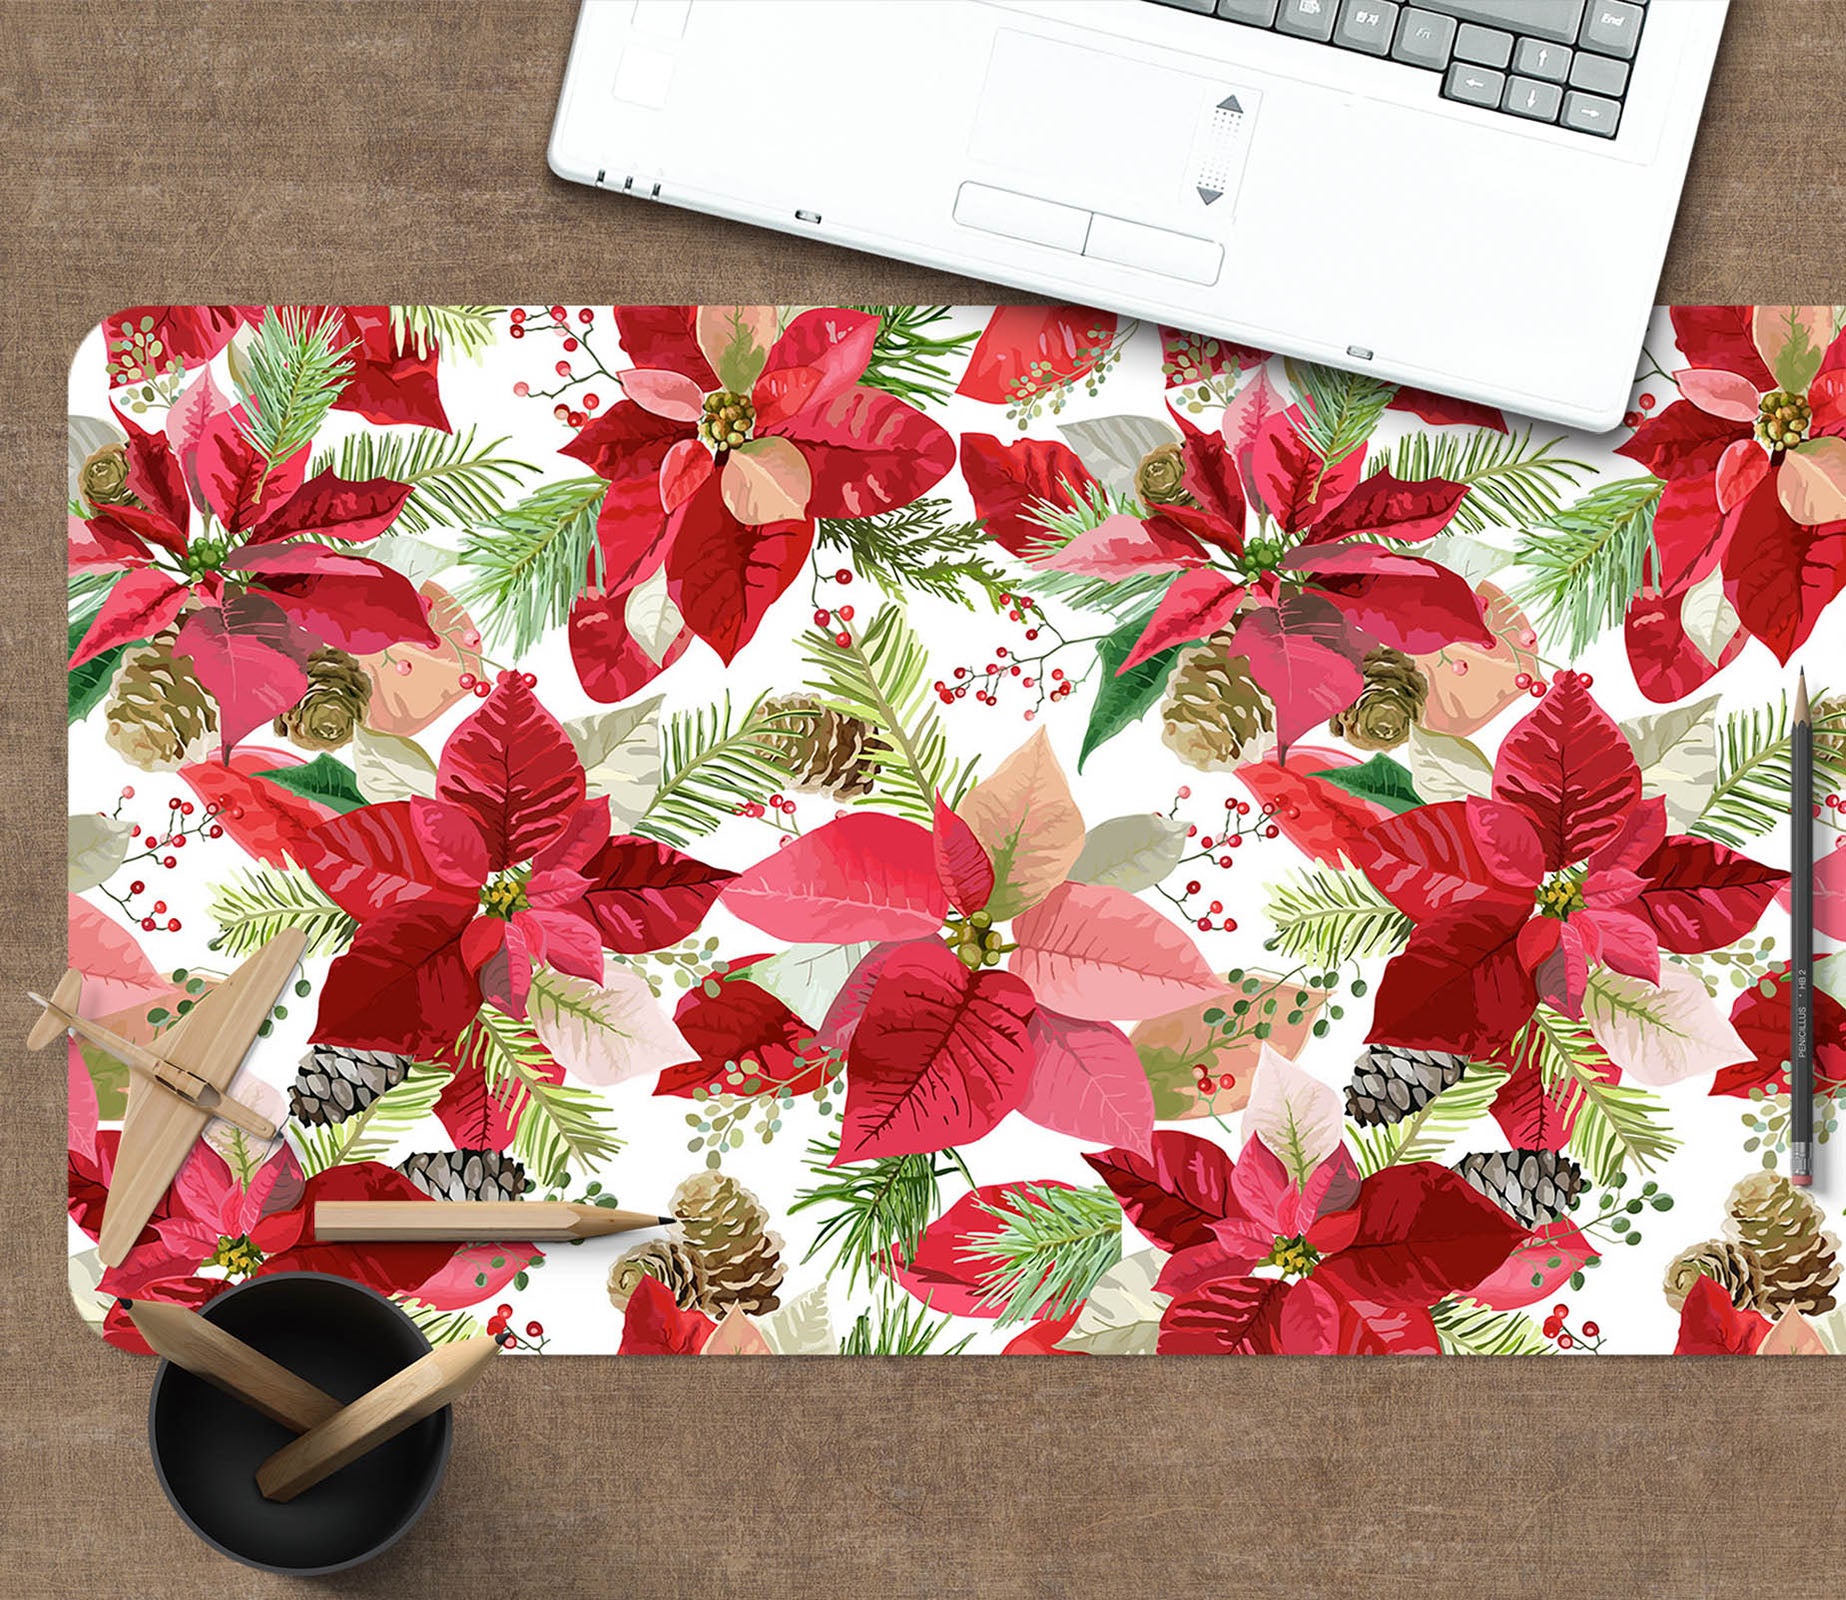 3D Red Leaves Flowers 53195 Christmas Desk Mat Xmas